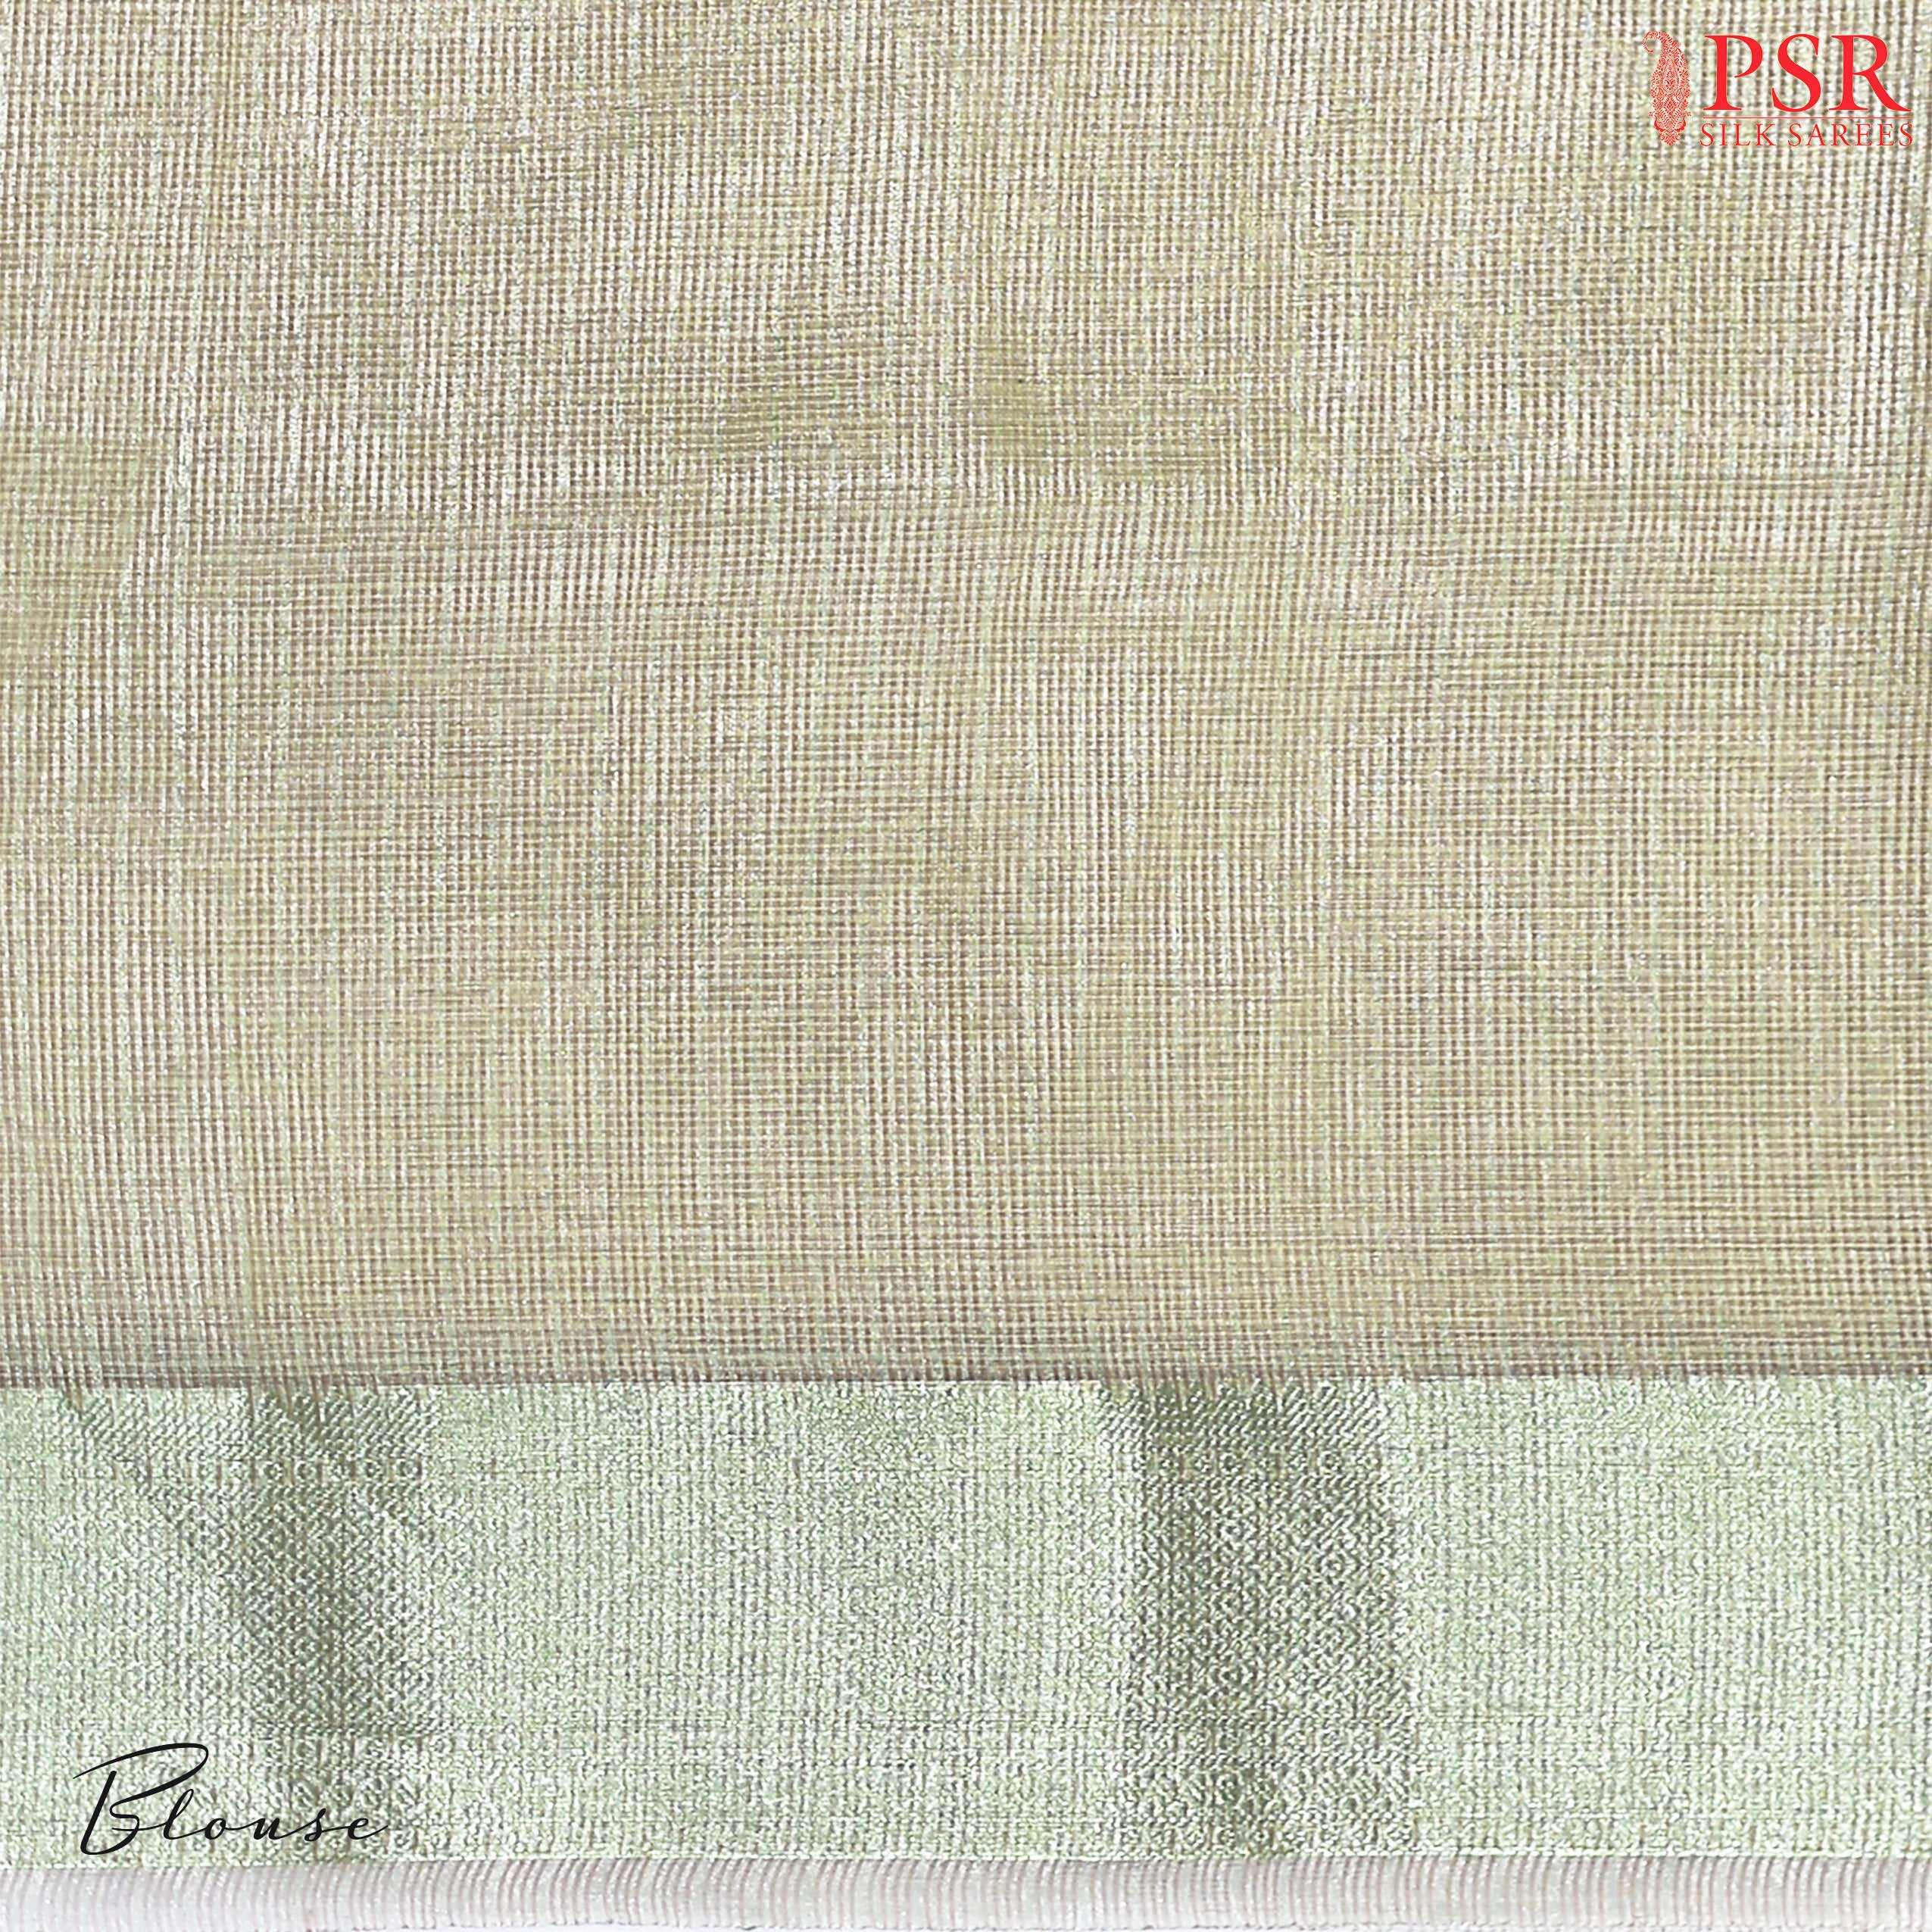 Light Green Tissue Embroidery Saree